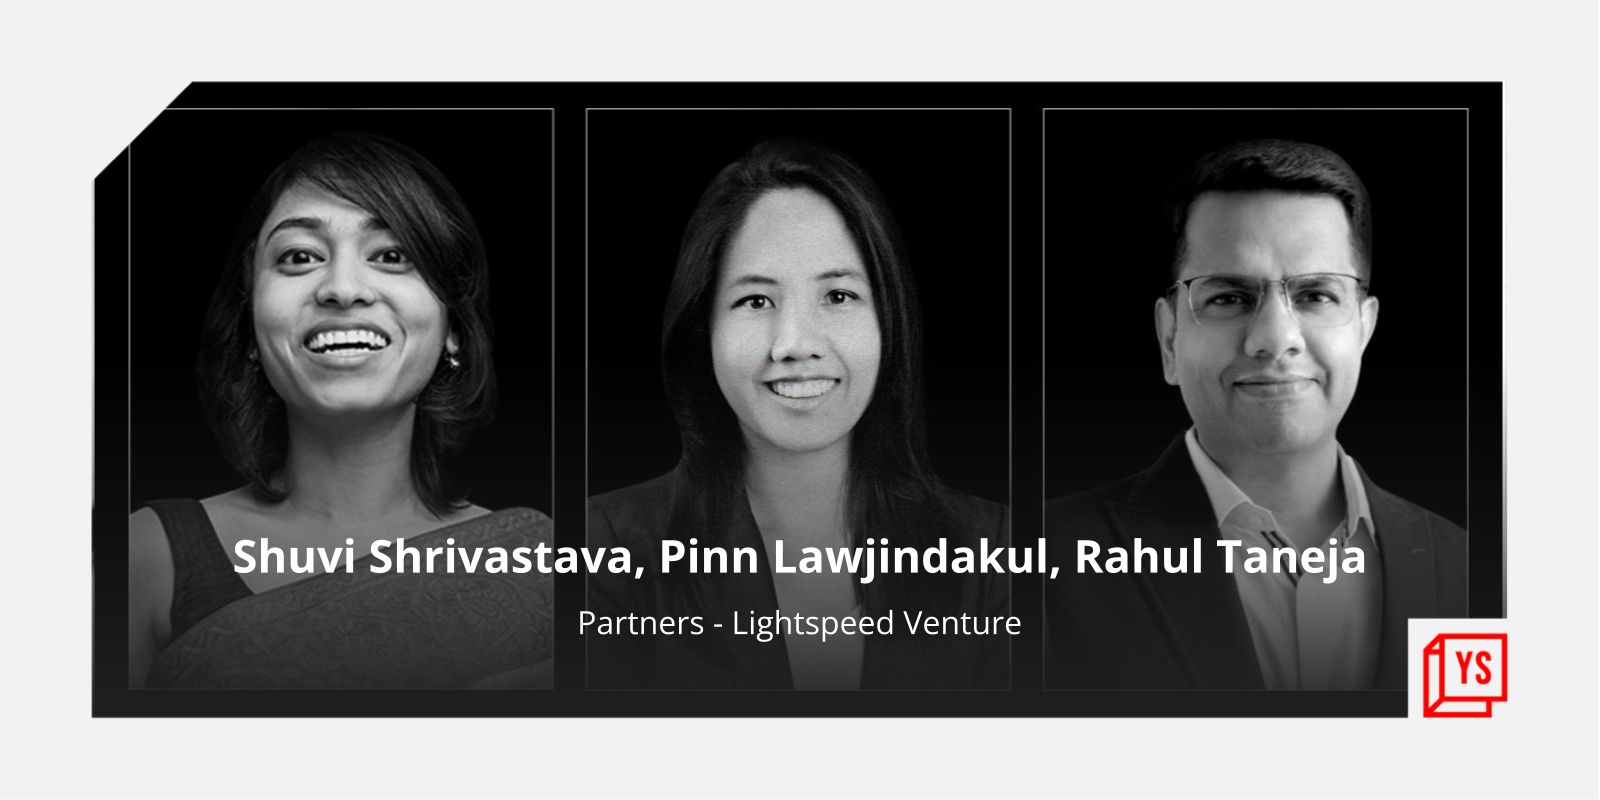 Lightspeed elevates three executives to Partner roles

